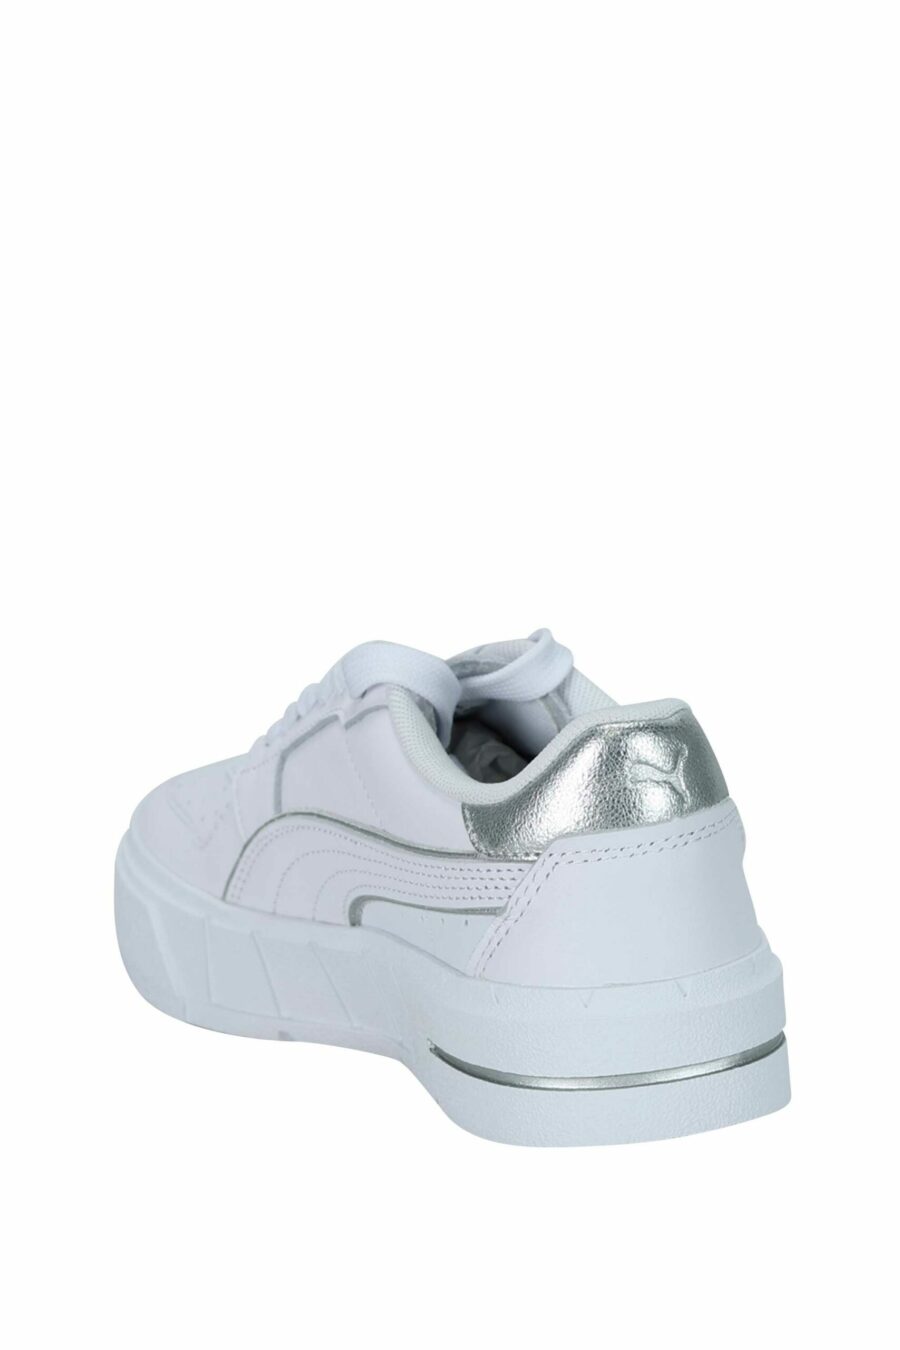 Zapatillas blancas con plateado "cali court" - 4065454895660 3 scaled